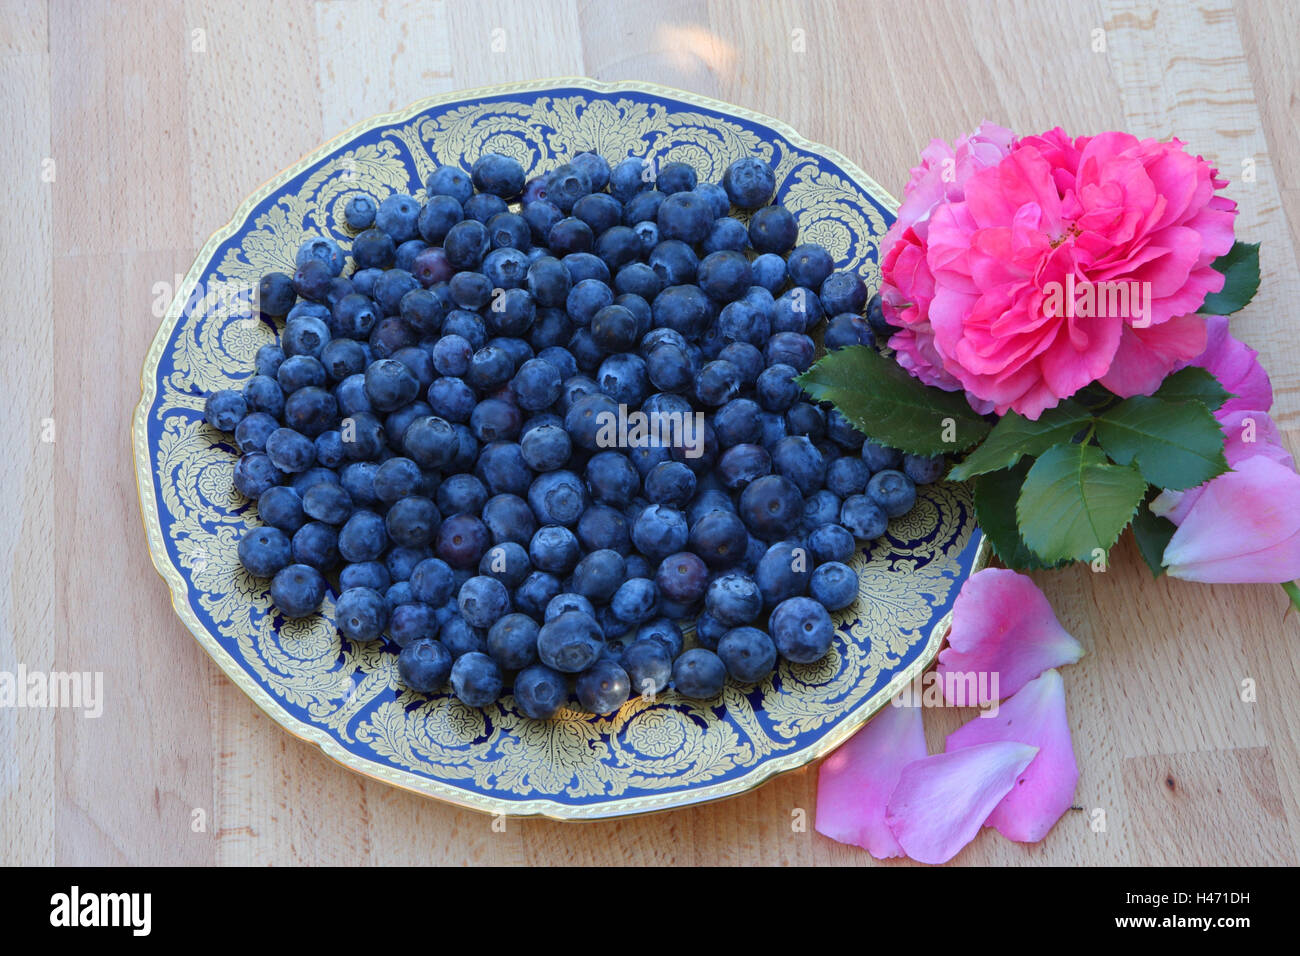 Blueberrys on a plate, Stock Photo